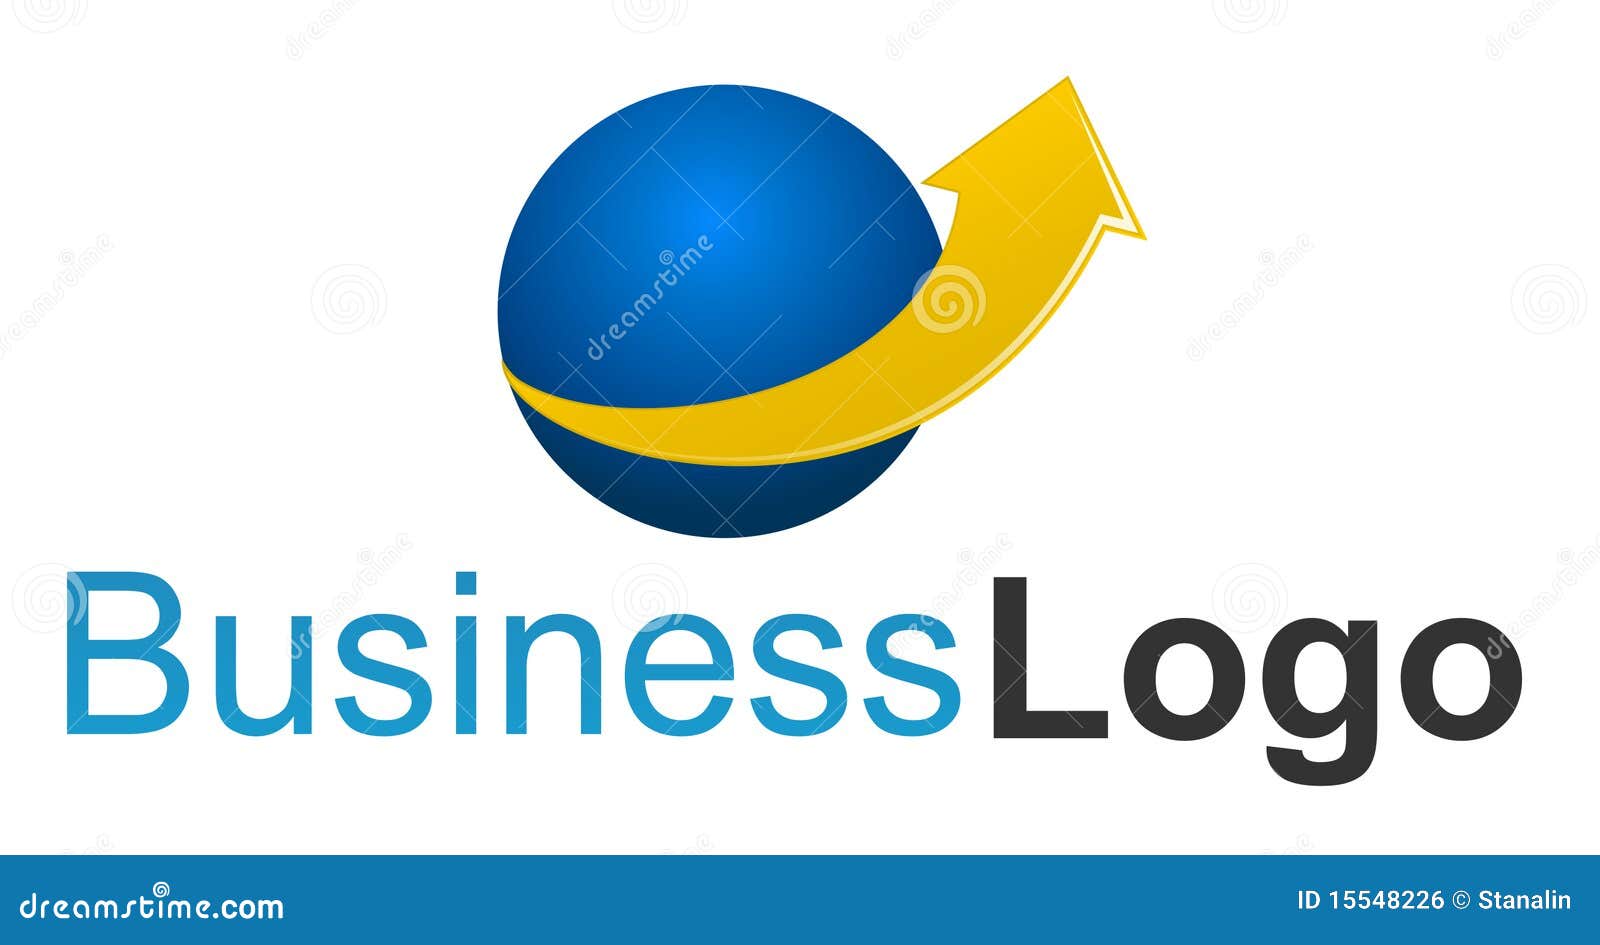 business logo clipart - photo #15